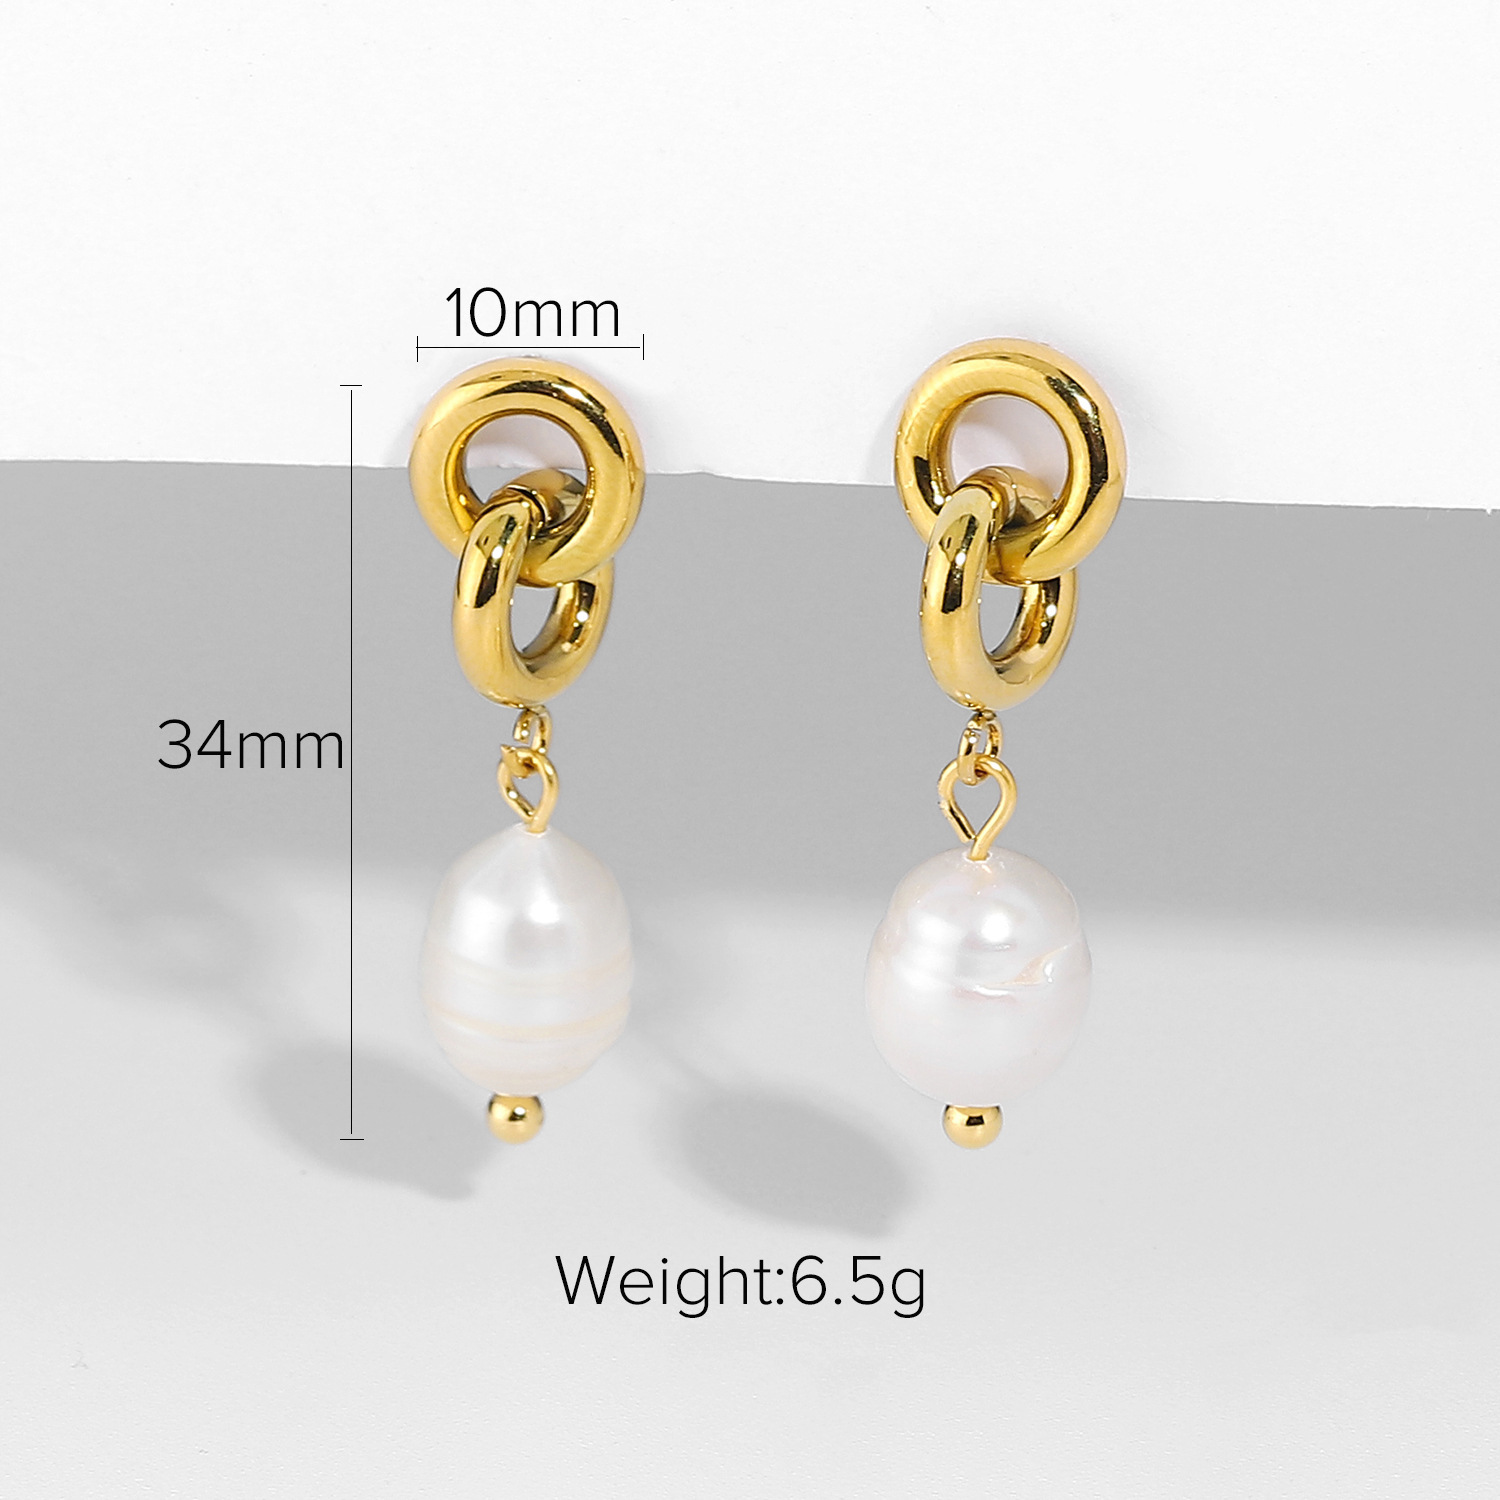 Earrings Steel Stainless Fashion Gold-plated Chain – Women\'s FUIERO Drop